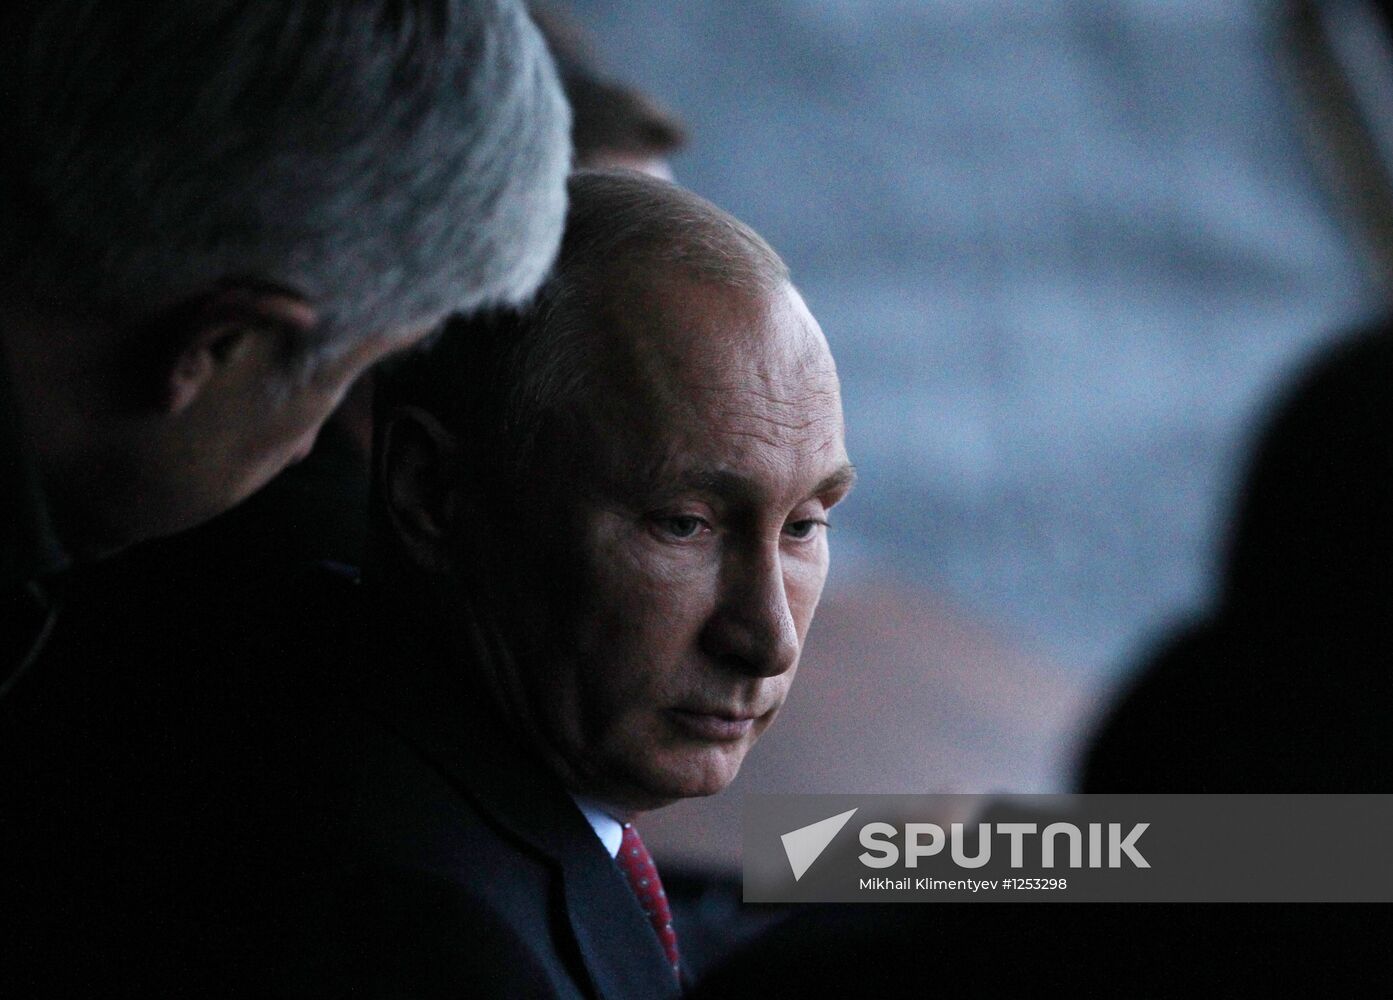 Vladimir Putin on working visit in Ulyanovsk Region